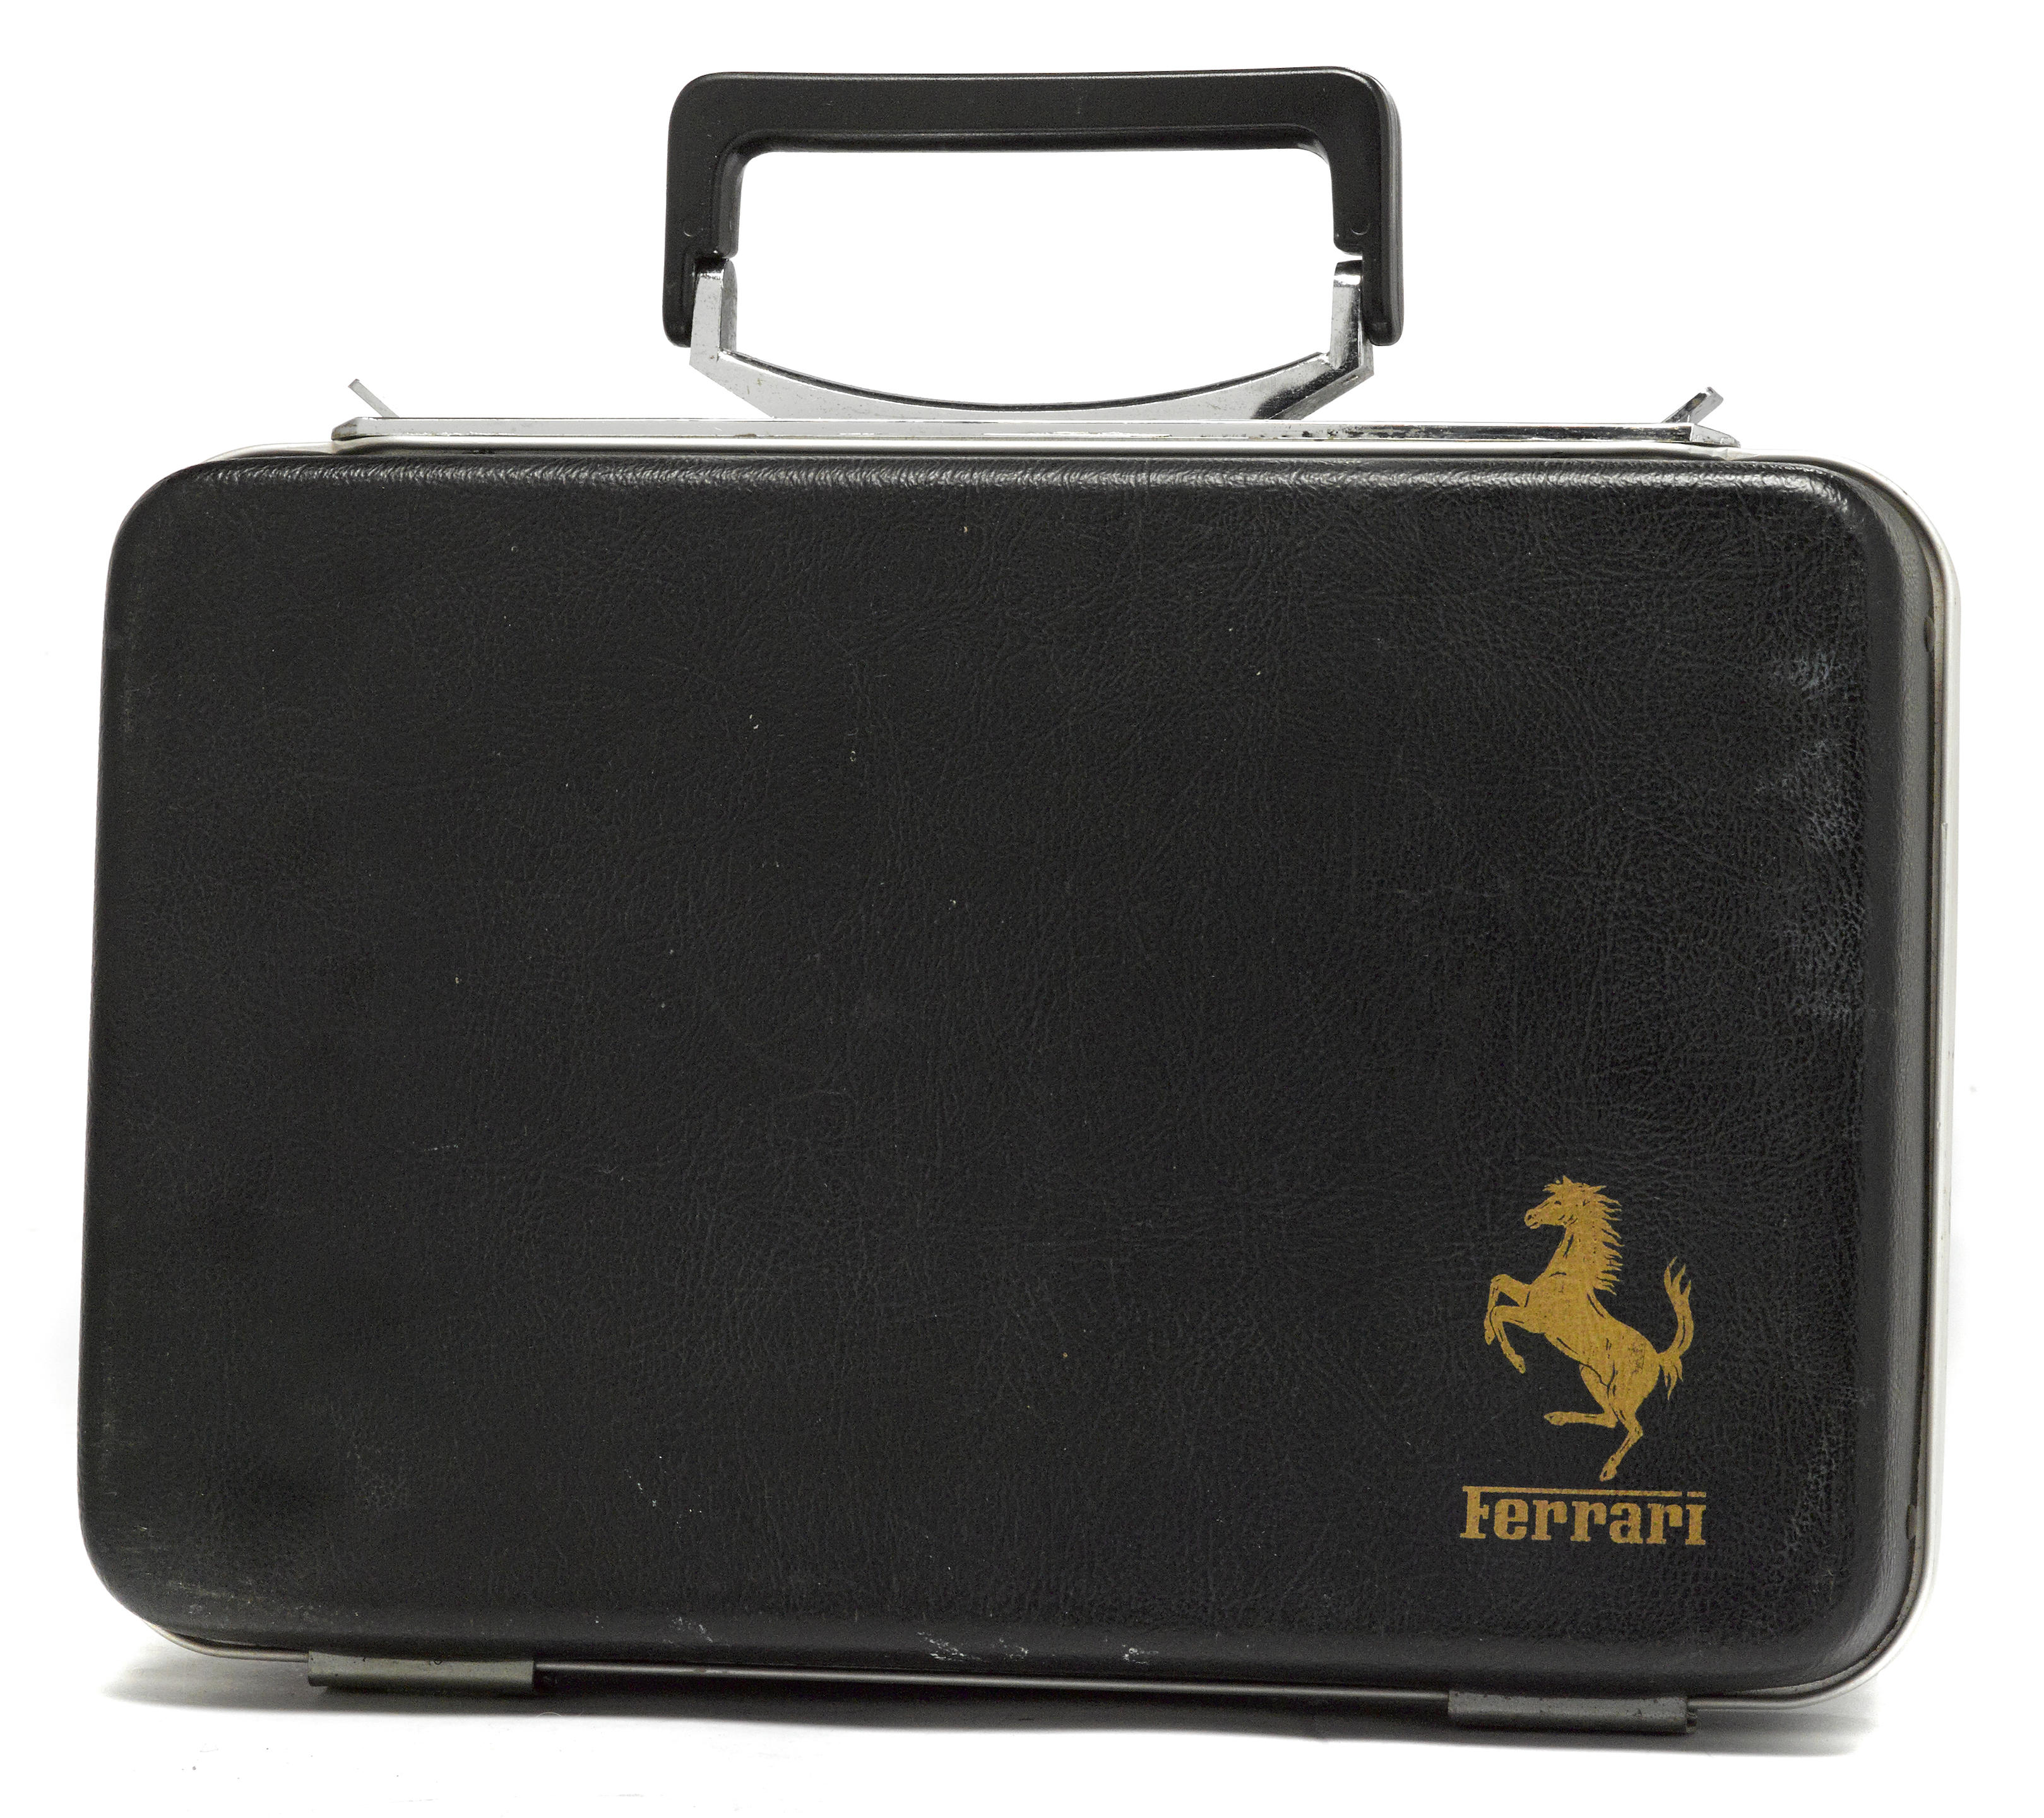 An original Ferrari 'briefcase style' toolkit,